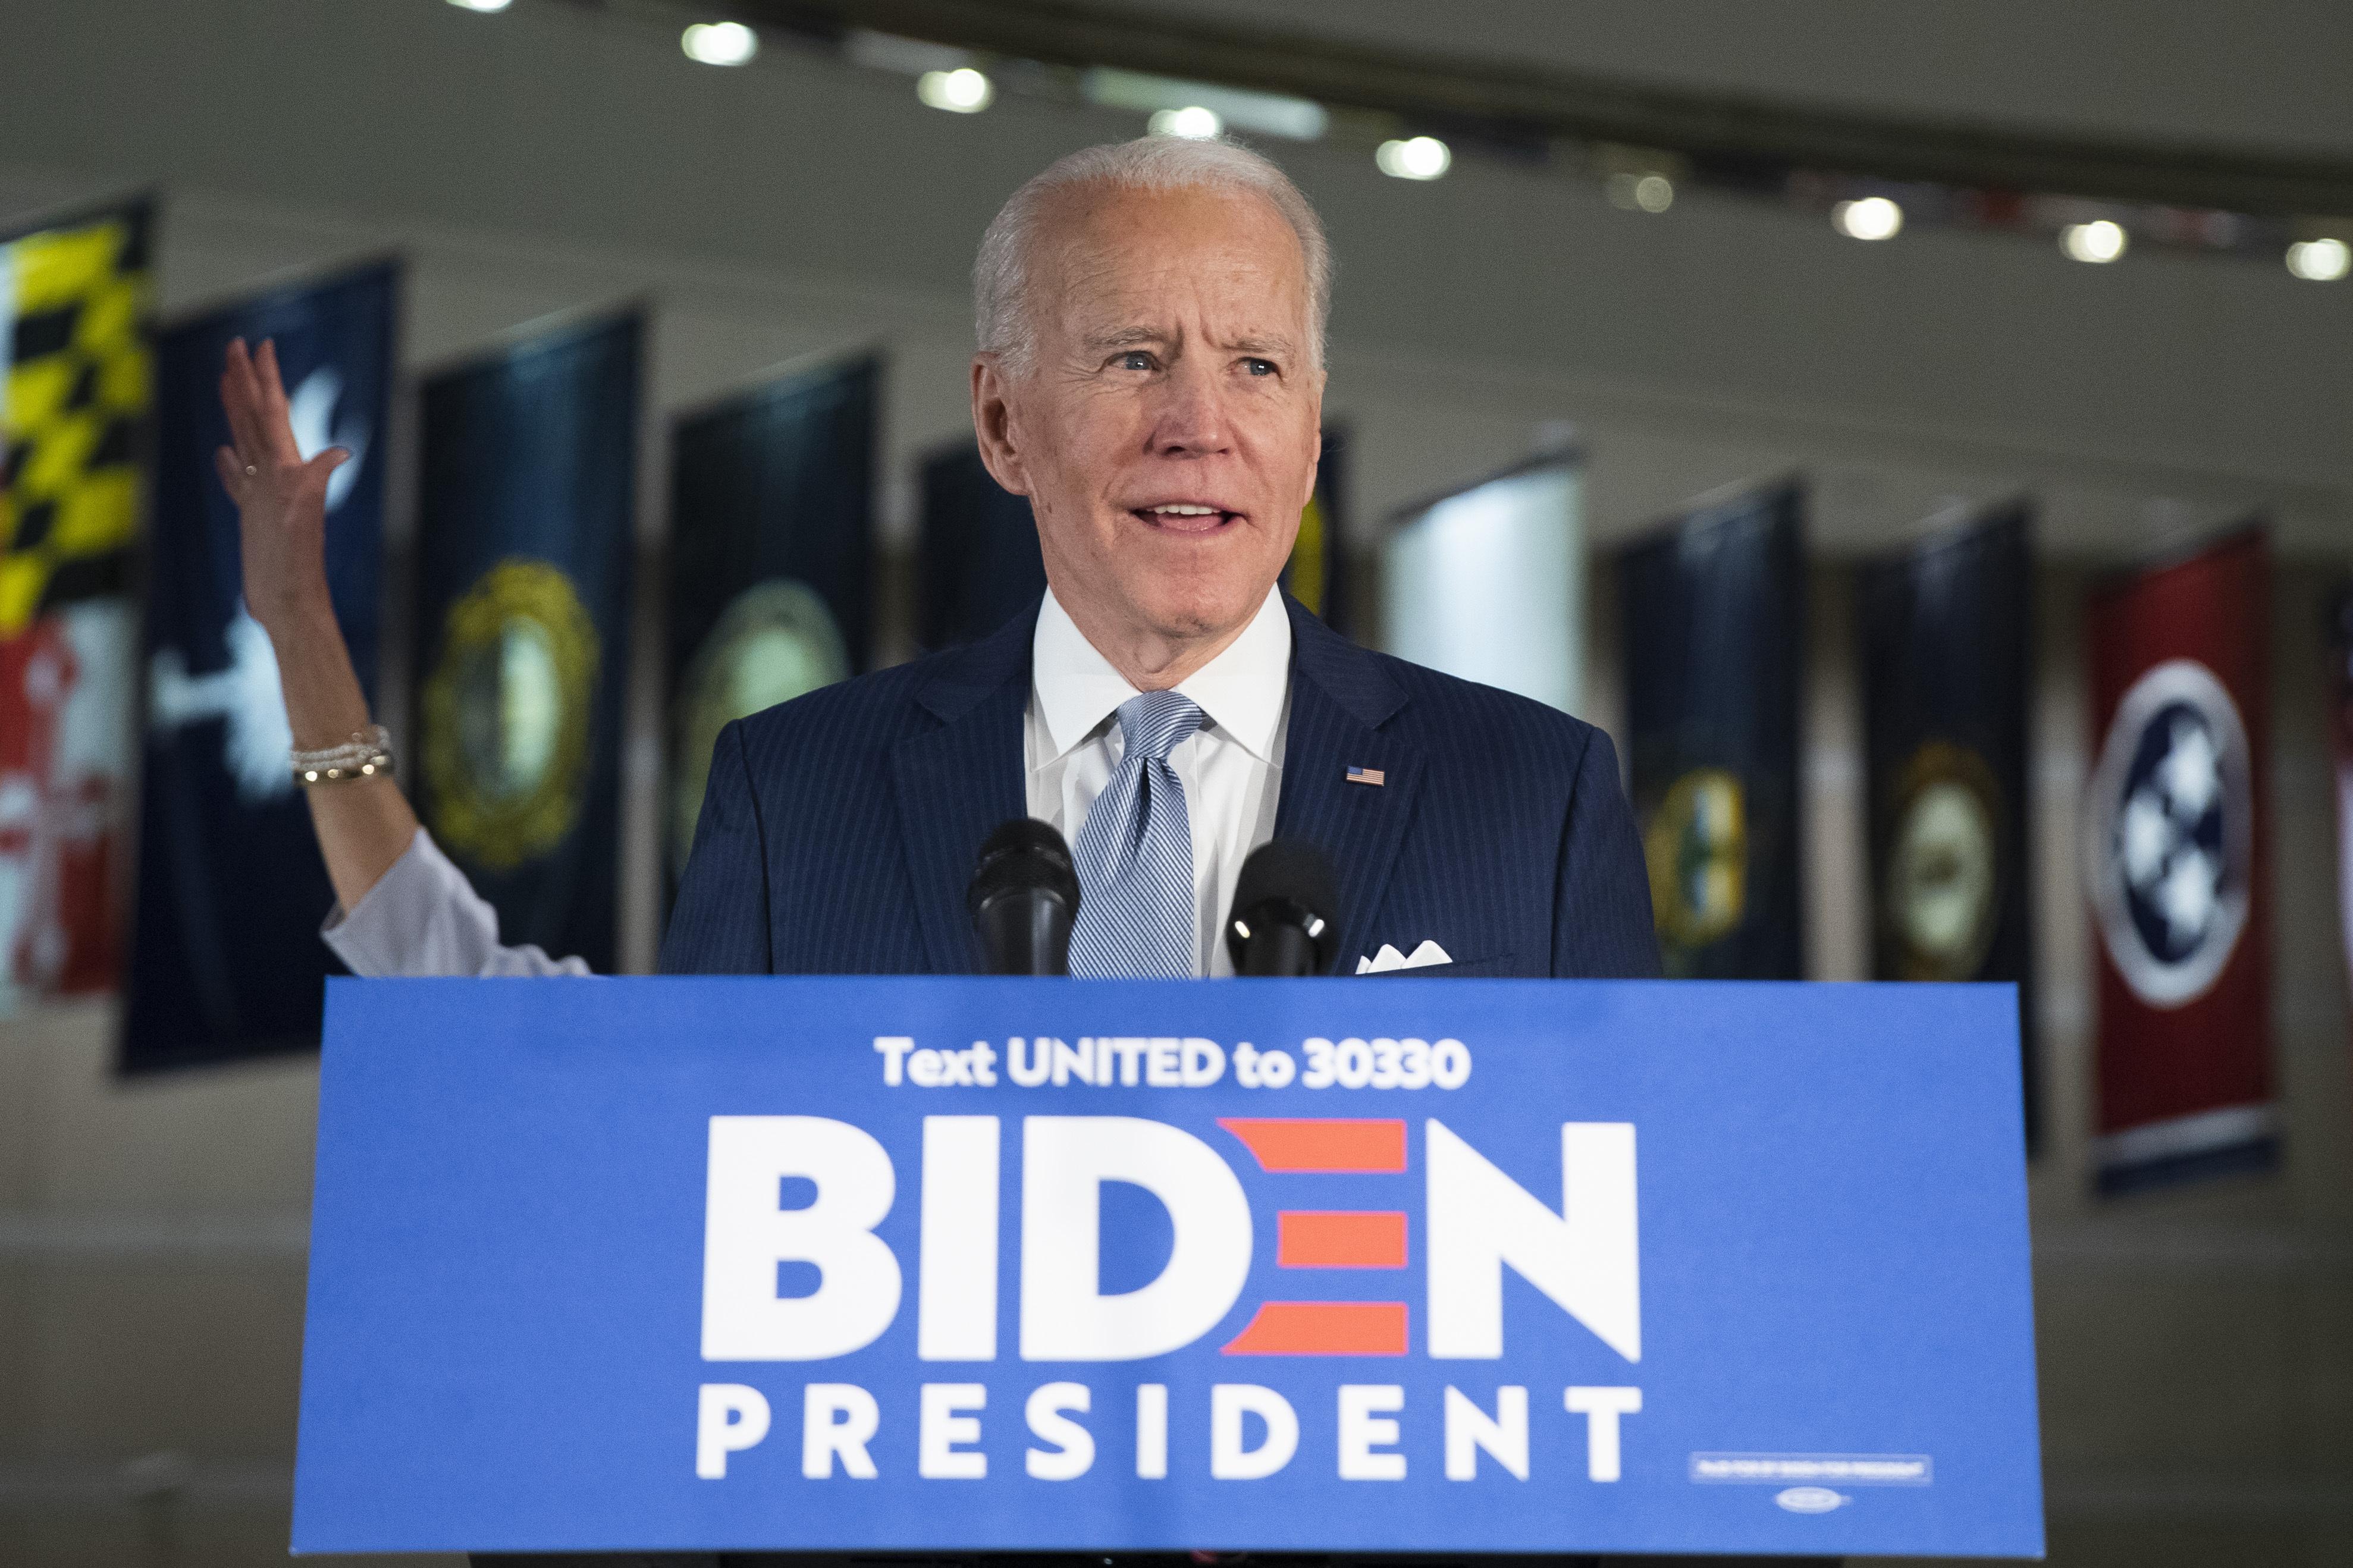 Former Vice President Joe Biden Wins Idaho The Spokesman Review